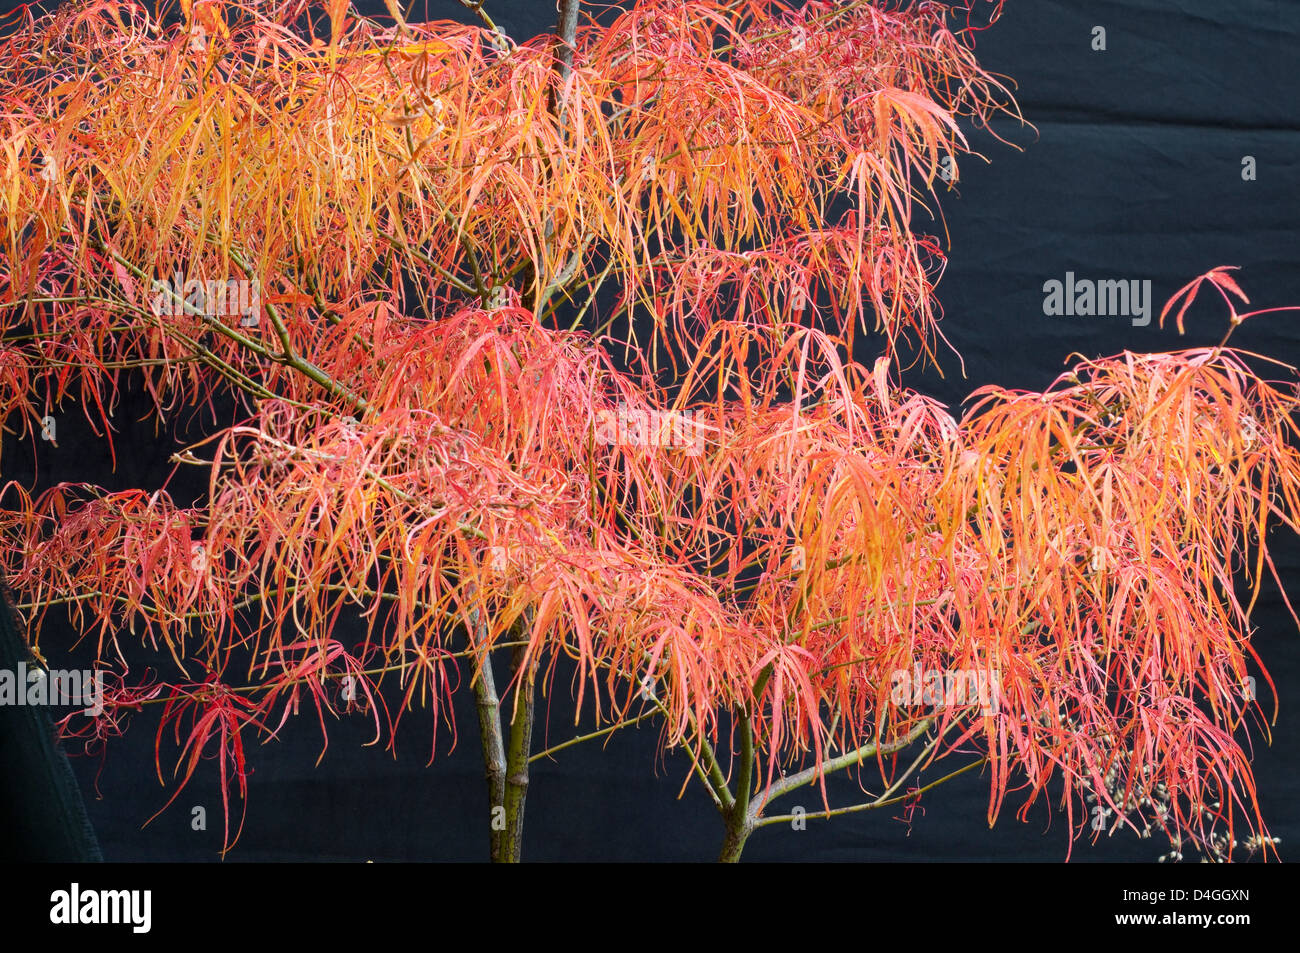 Acer palmatum 'Koto no ito'. Stock Photo